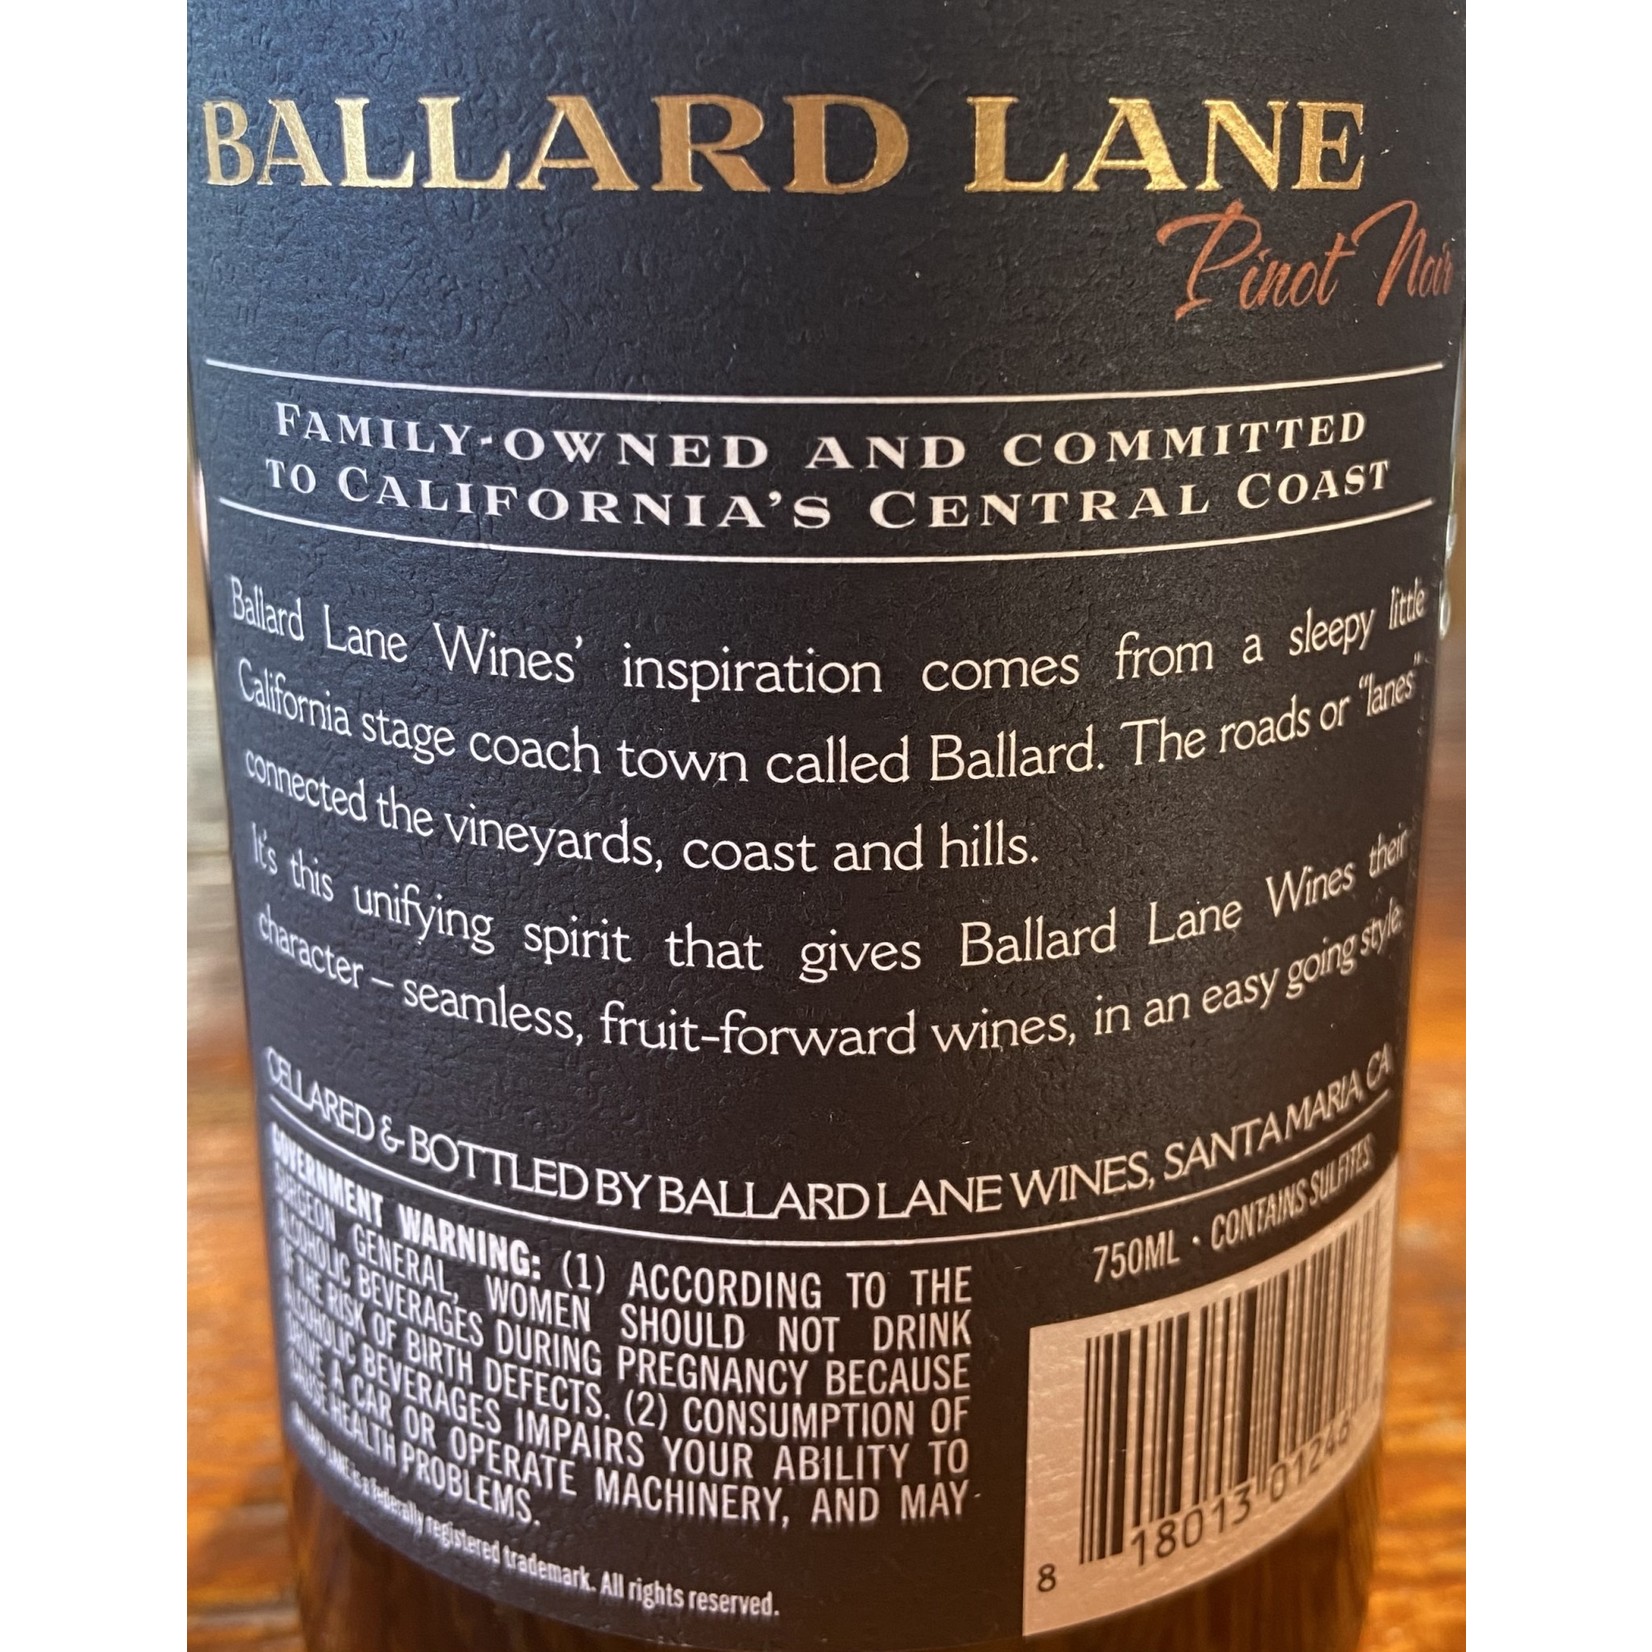 Ballard Lane Pinot Noir, Central Coast, California 2018